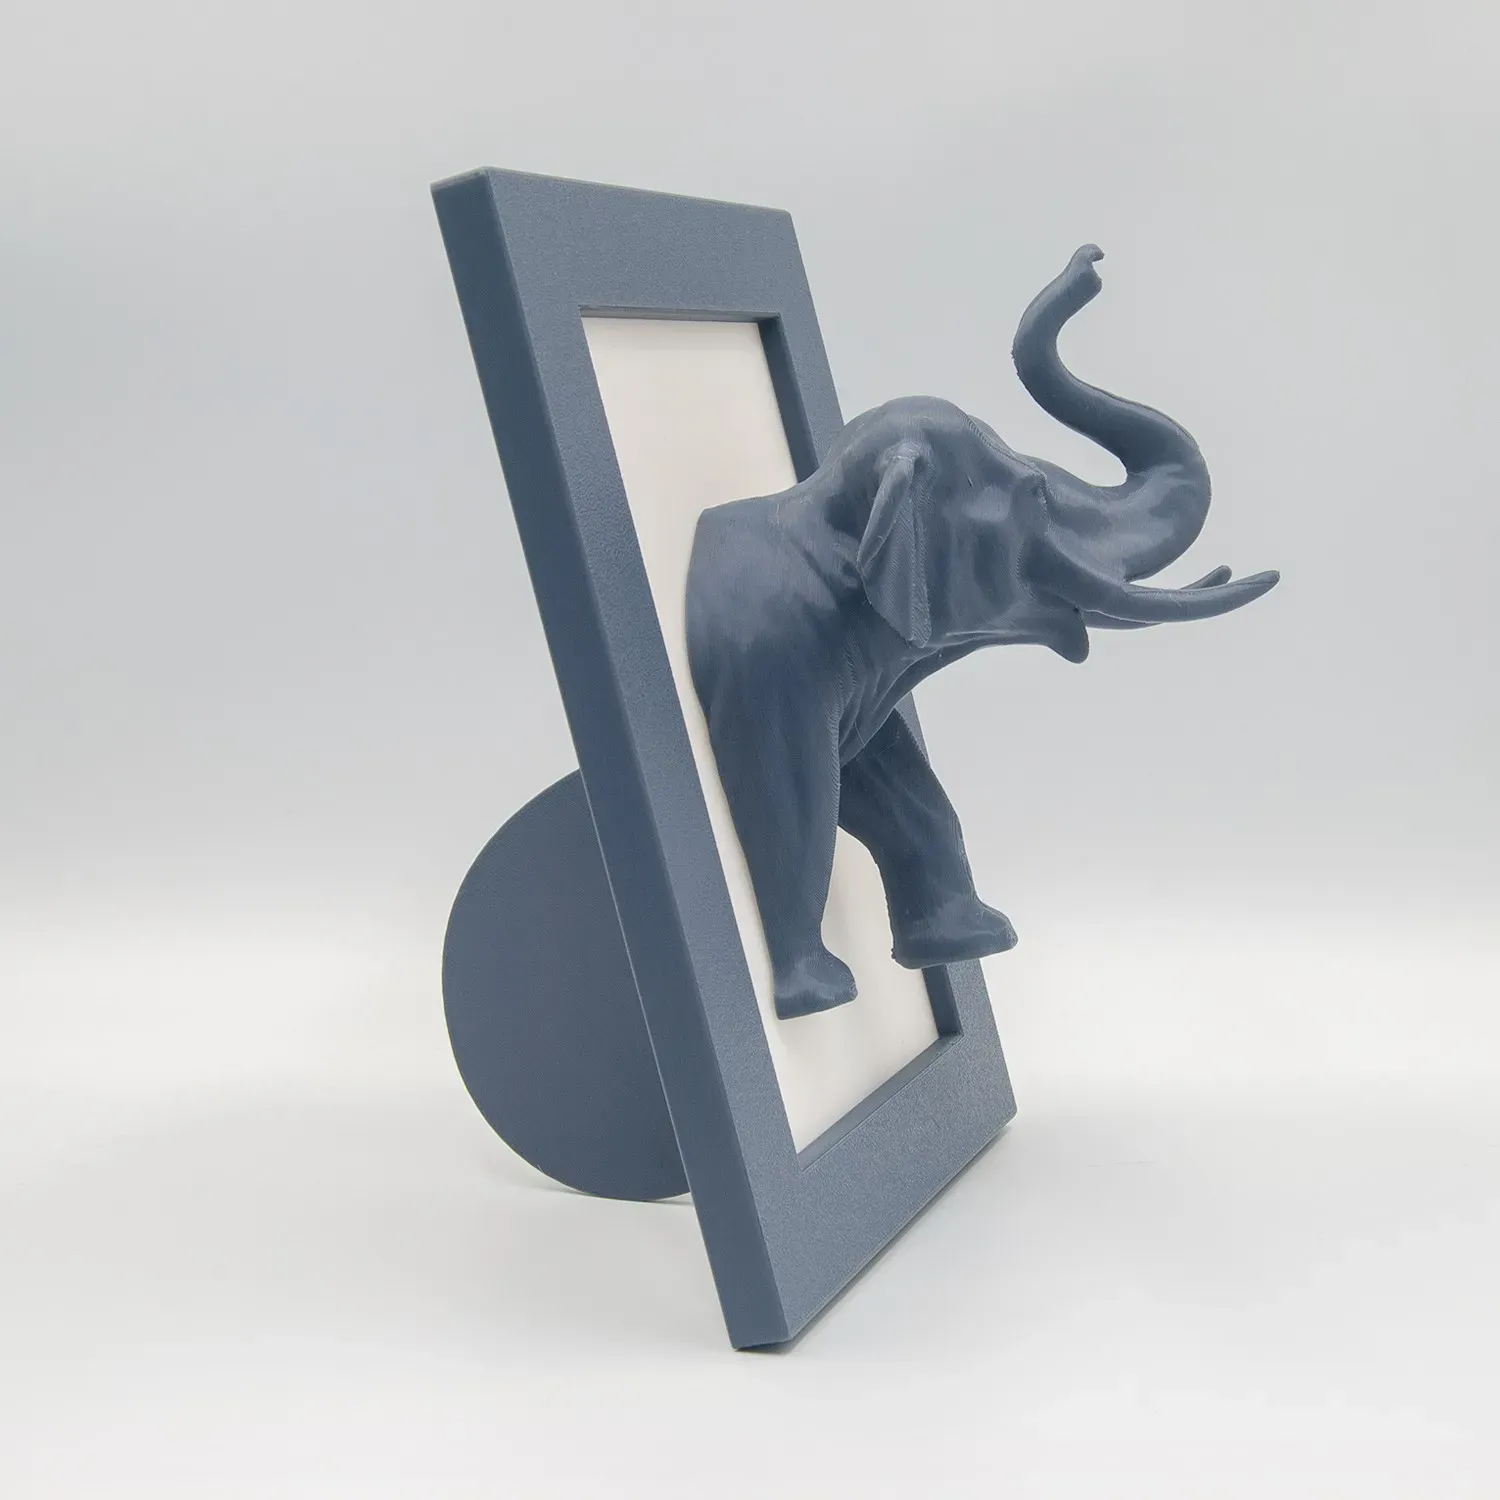 Elephant Desktop Frame